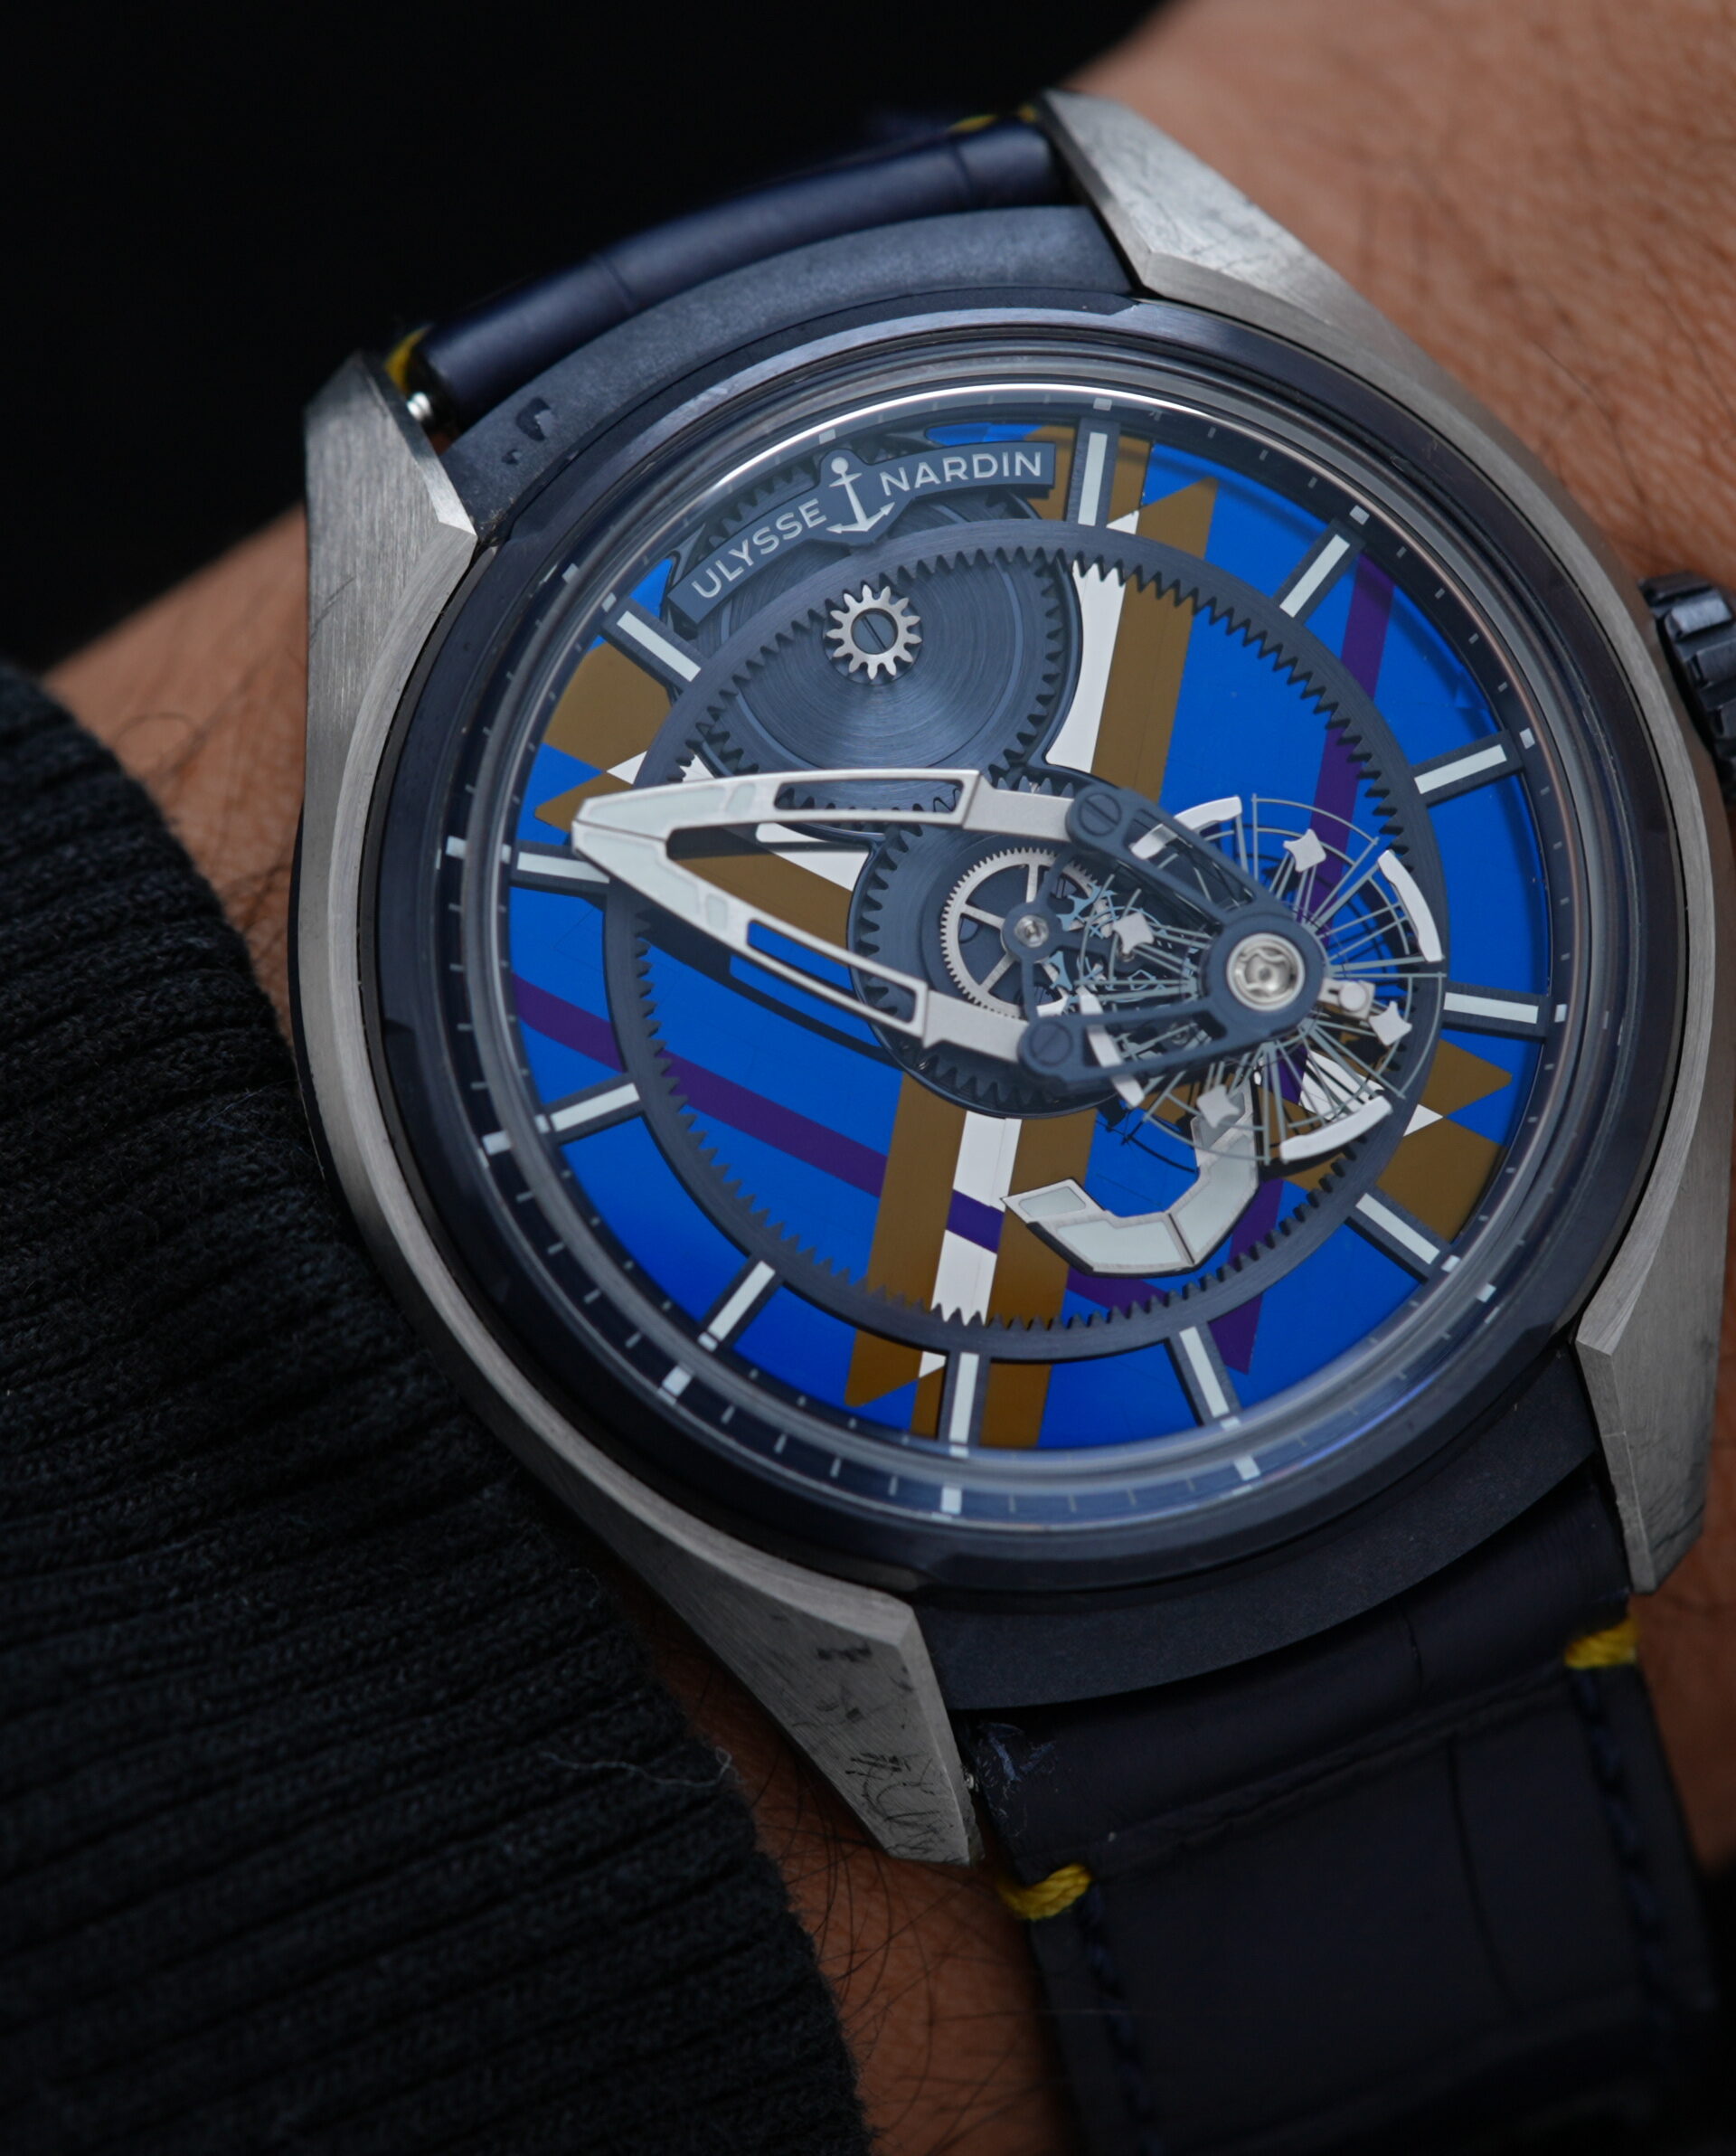 Ulysse Nardin Freak X Marquetry watch featured on the wrist.